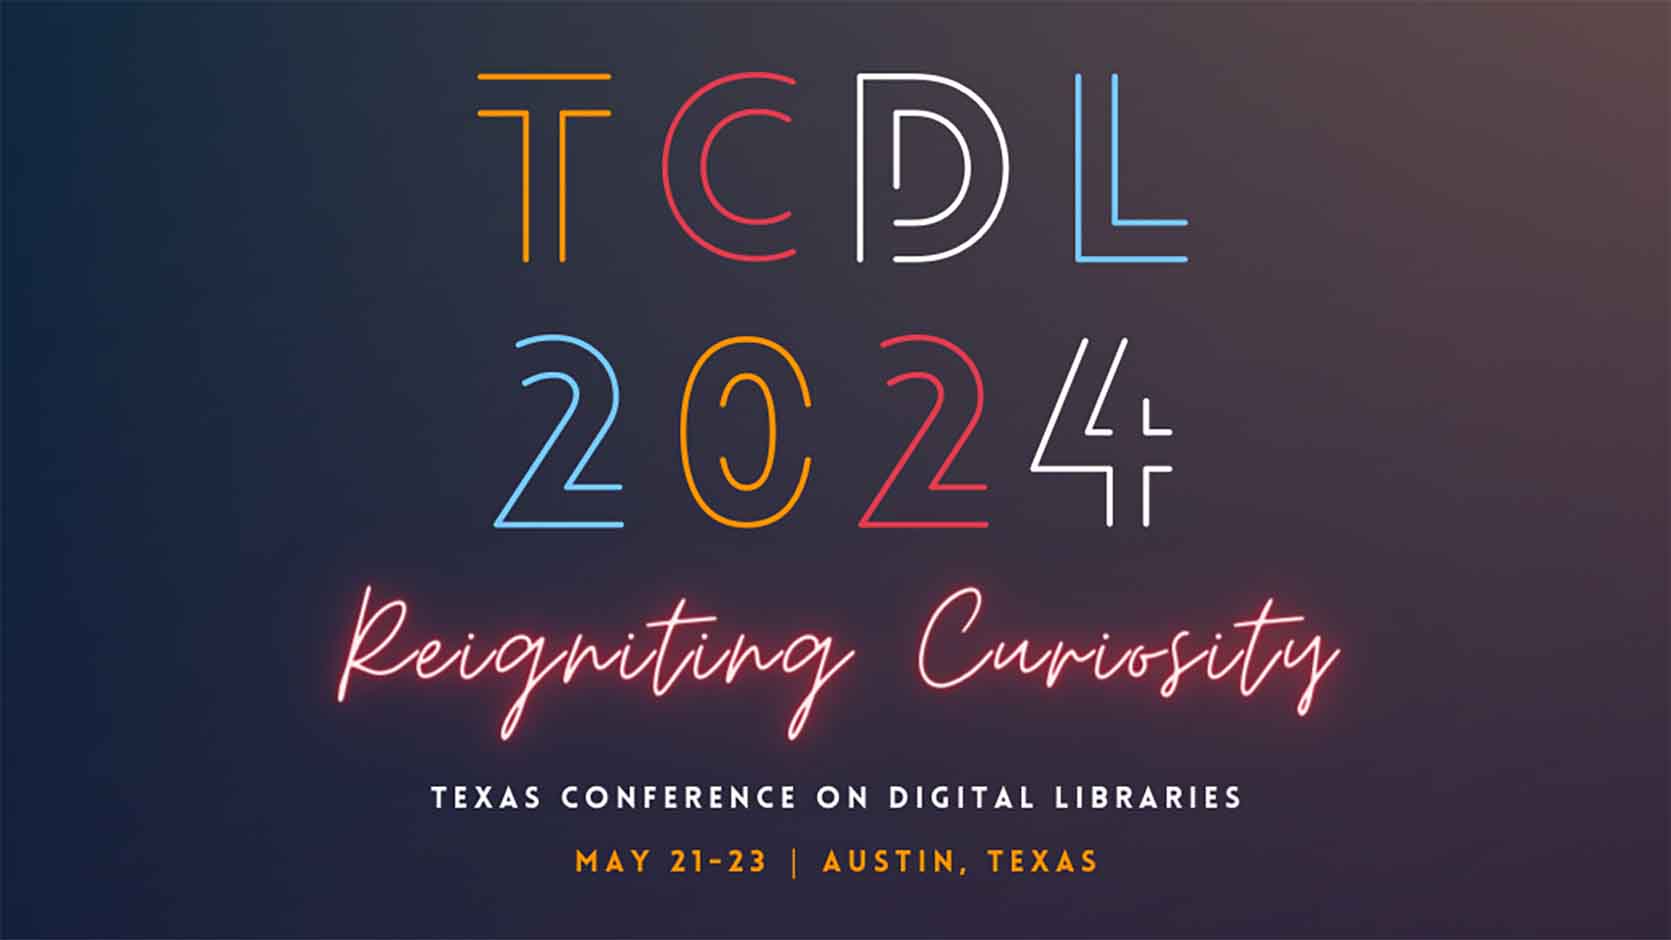 TCDL 2024 brand graphic, neon text over dark gradient field